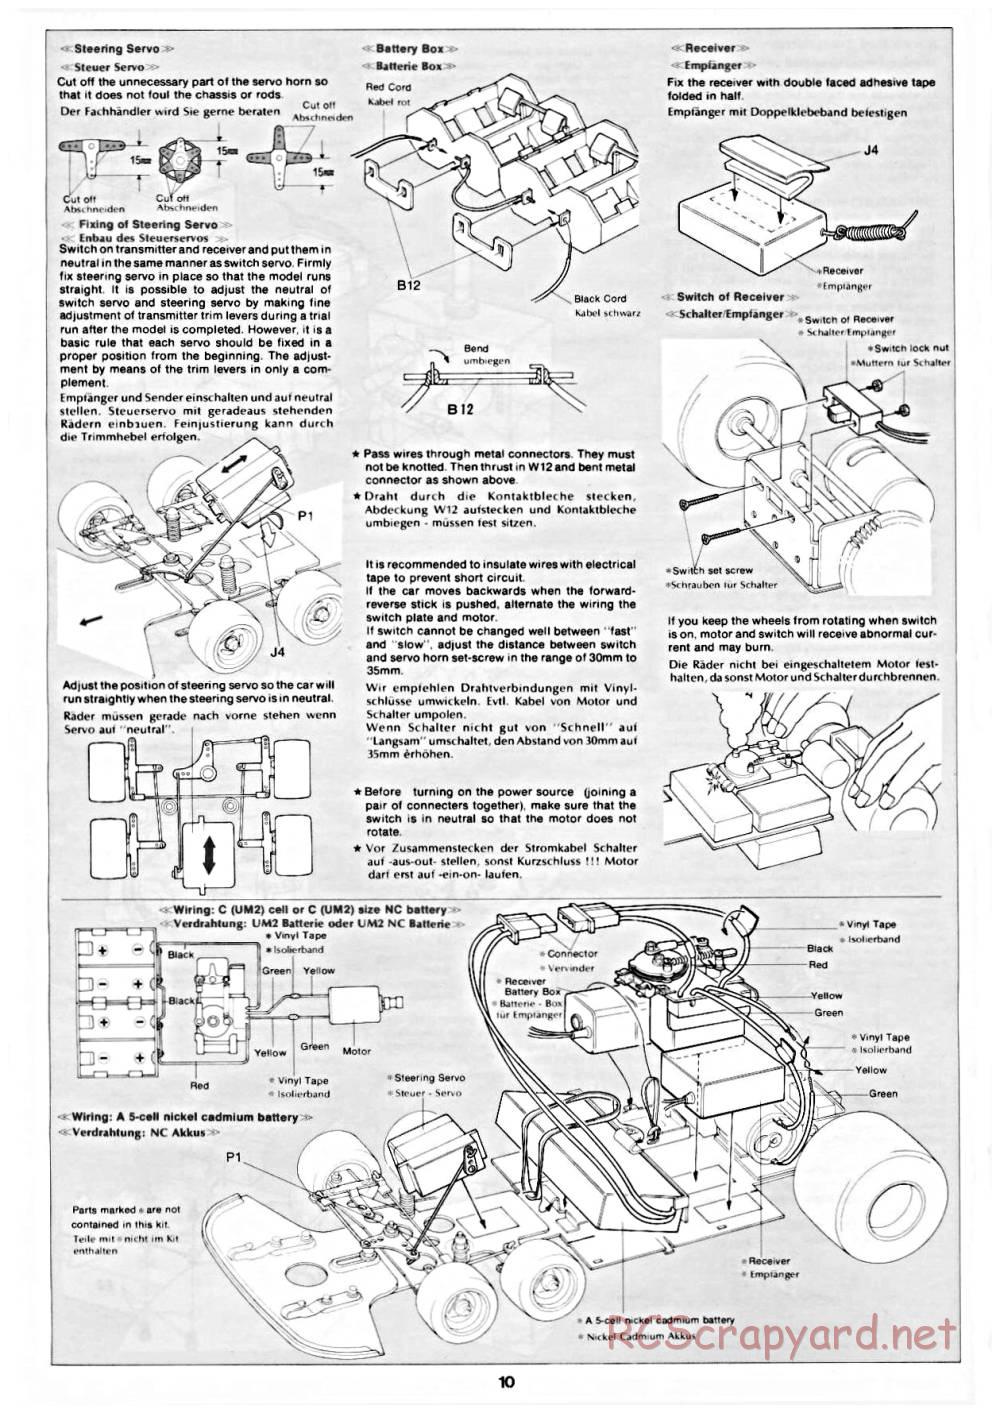 Tamiya - Tyrrell P34 Six Wheeler - 58003 - Manual - Page 10